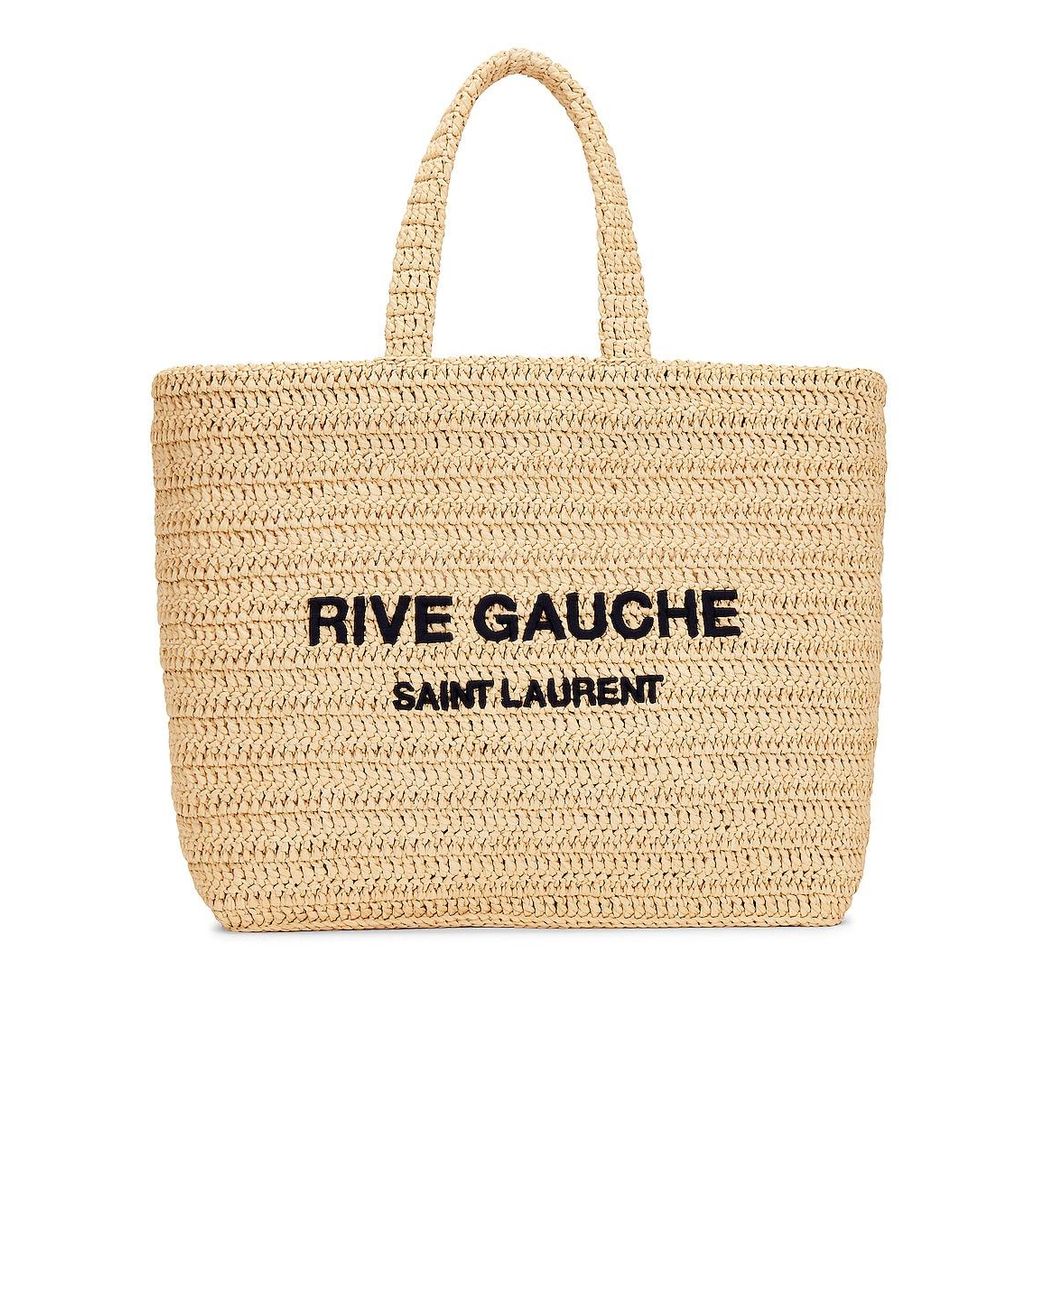 Saint Laurent Supple Rive Gauche Tote Bag in Natural | Lyst